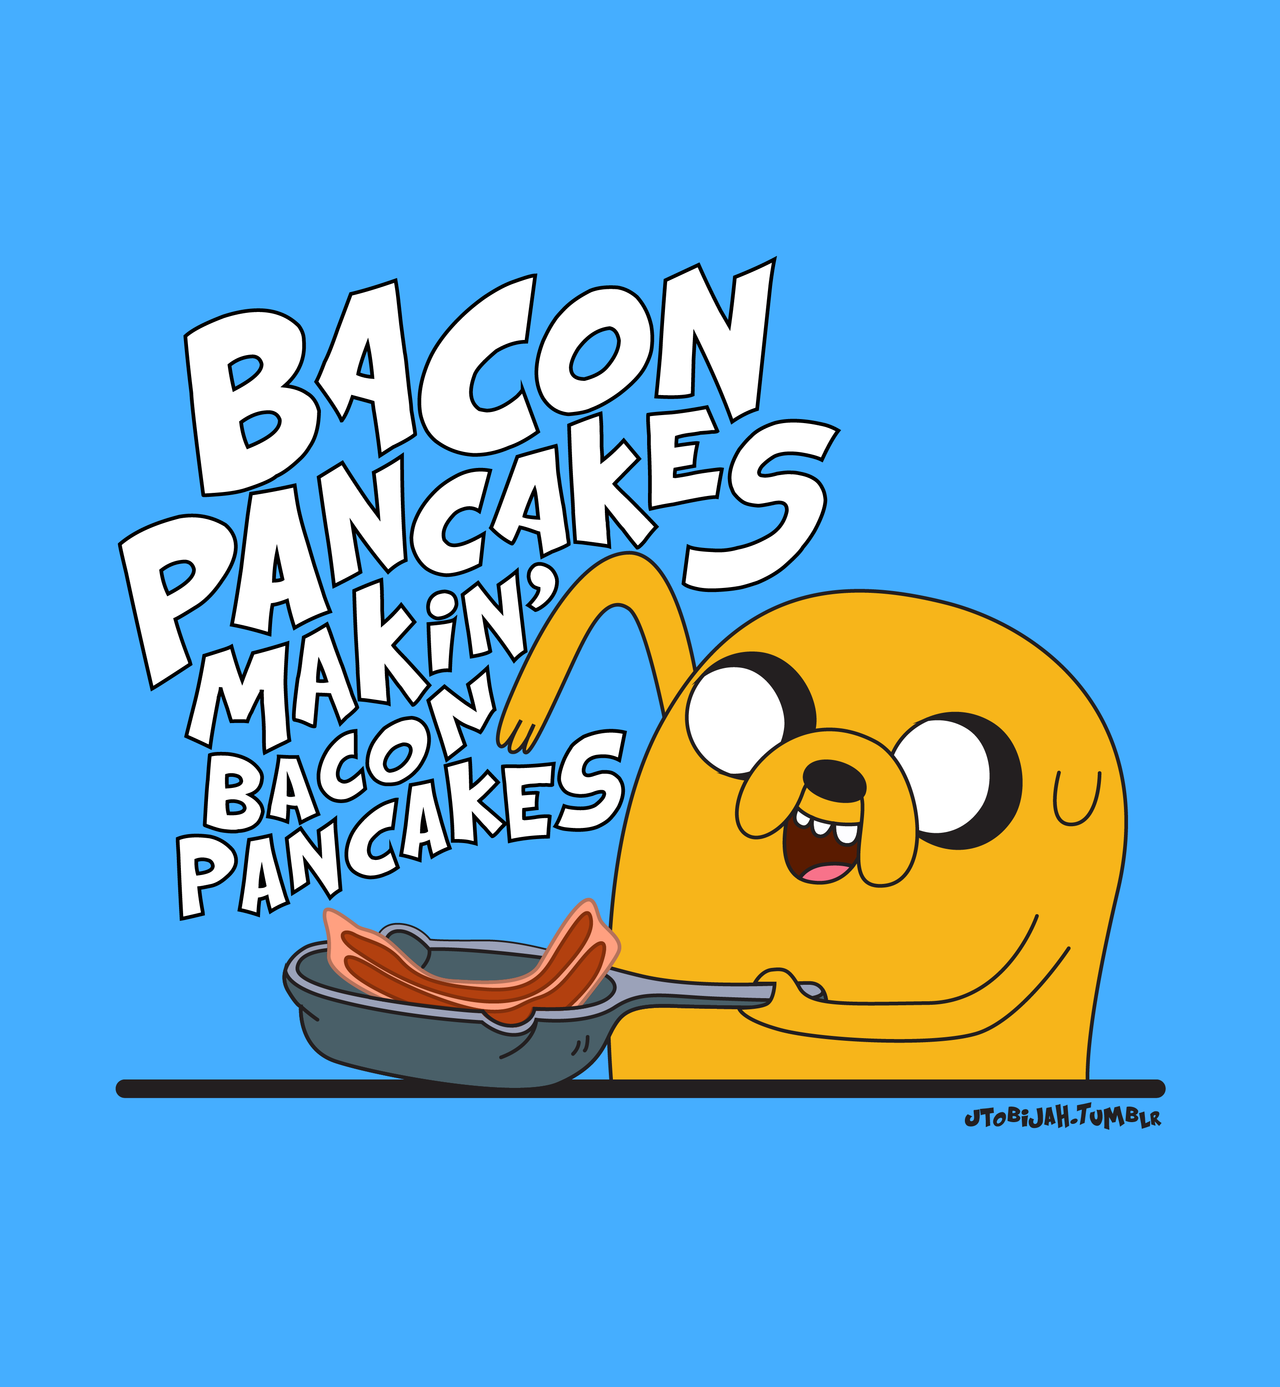 Pancakes or Bacon?